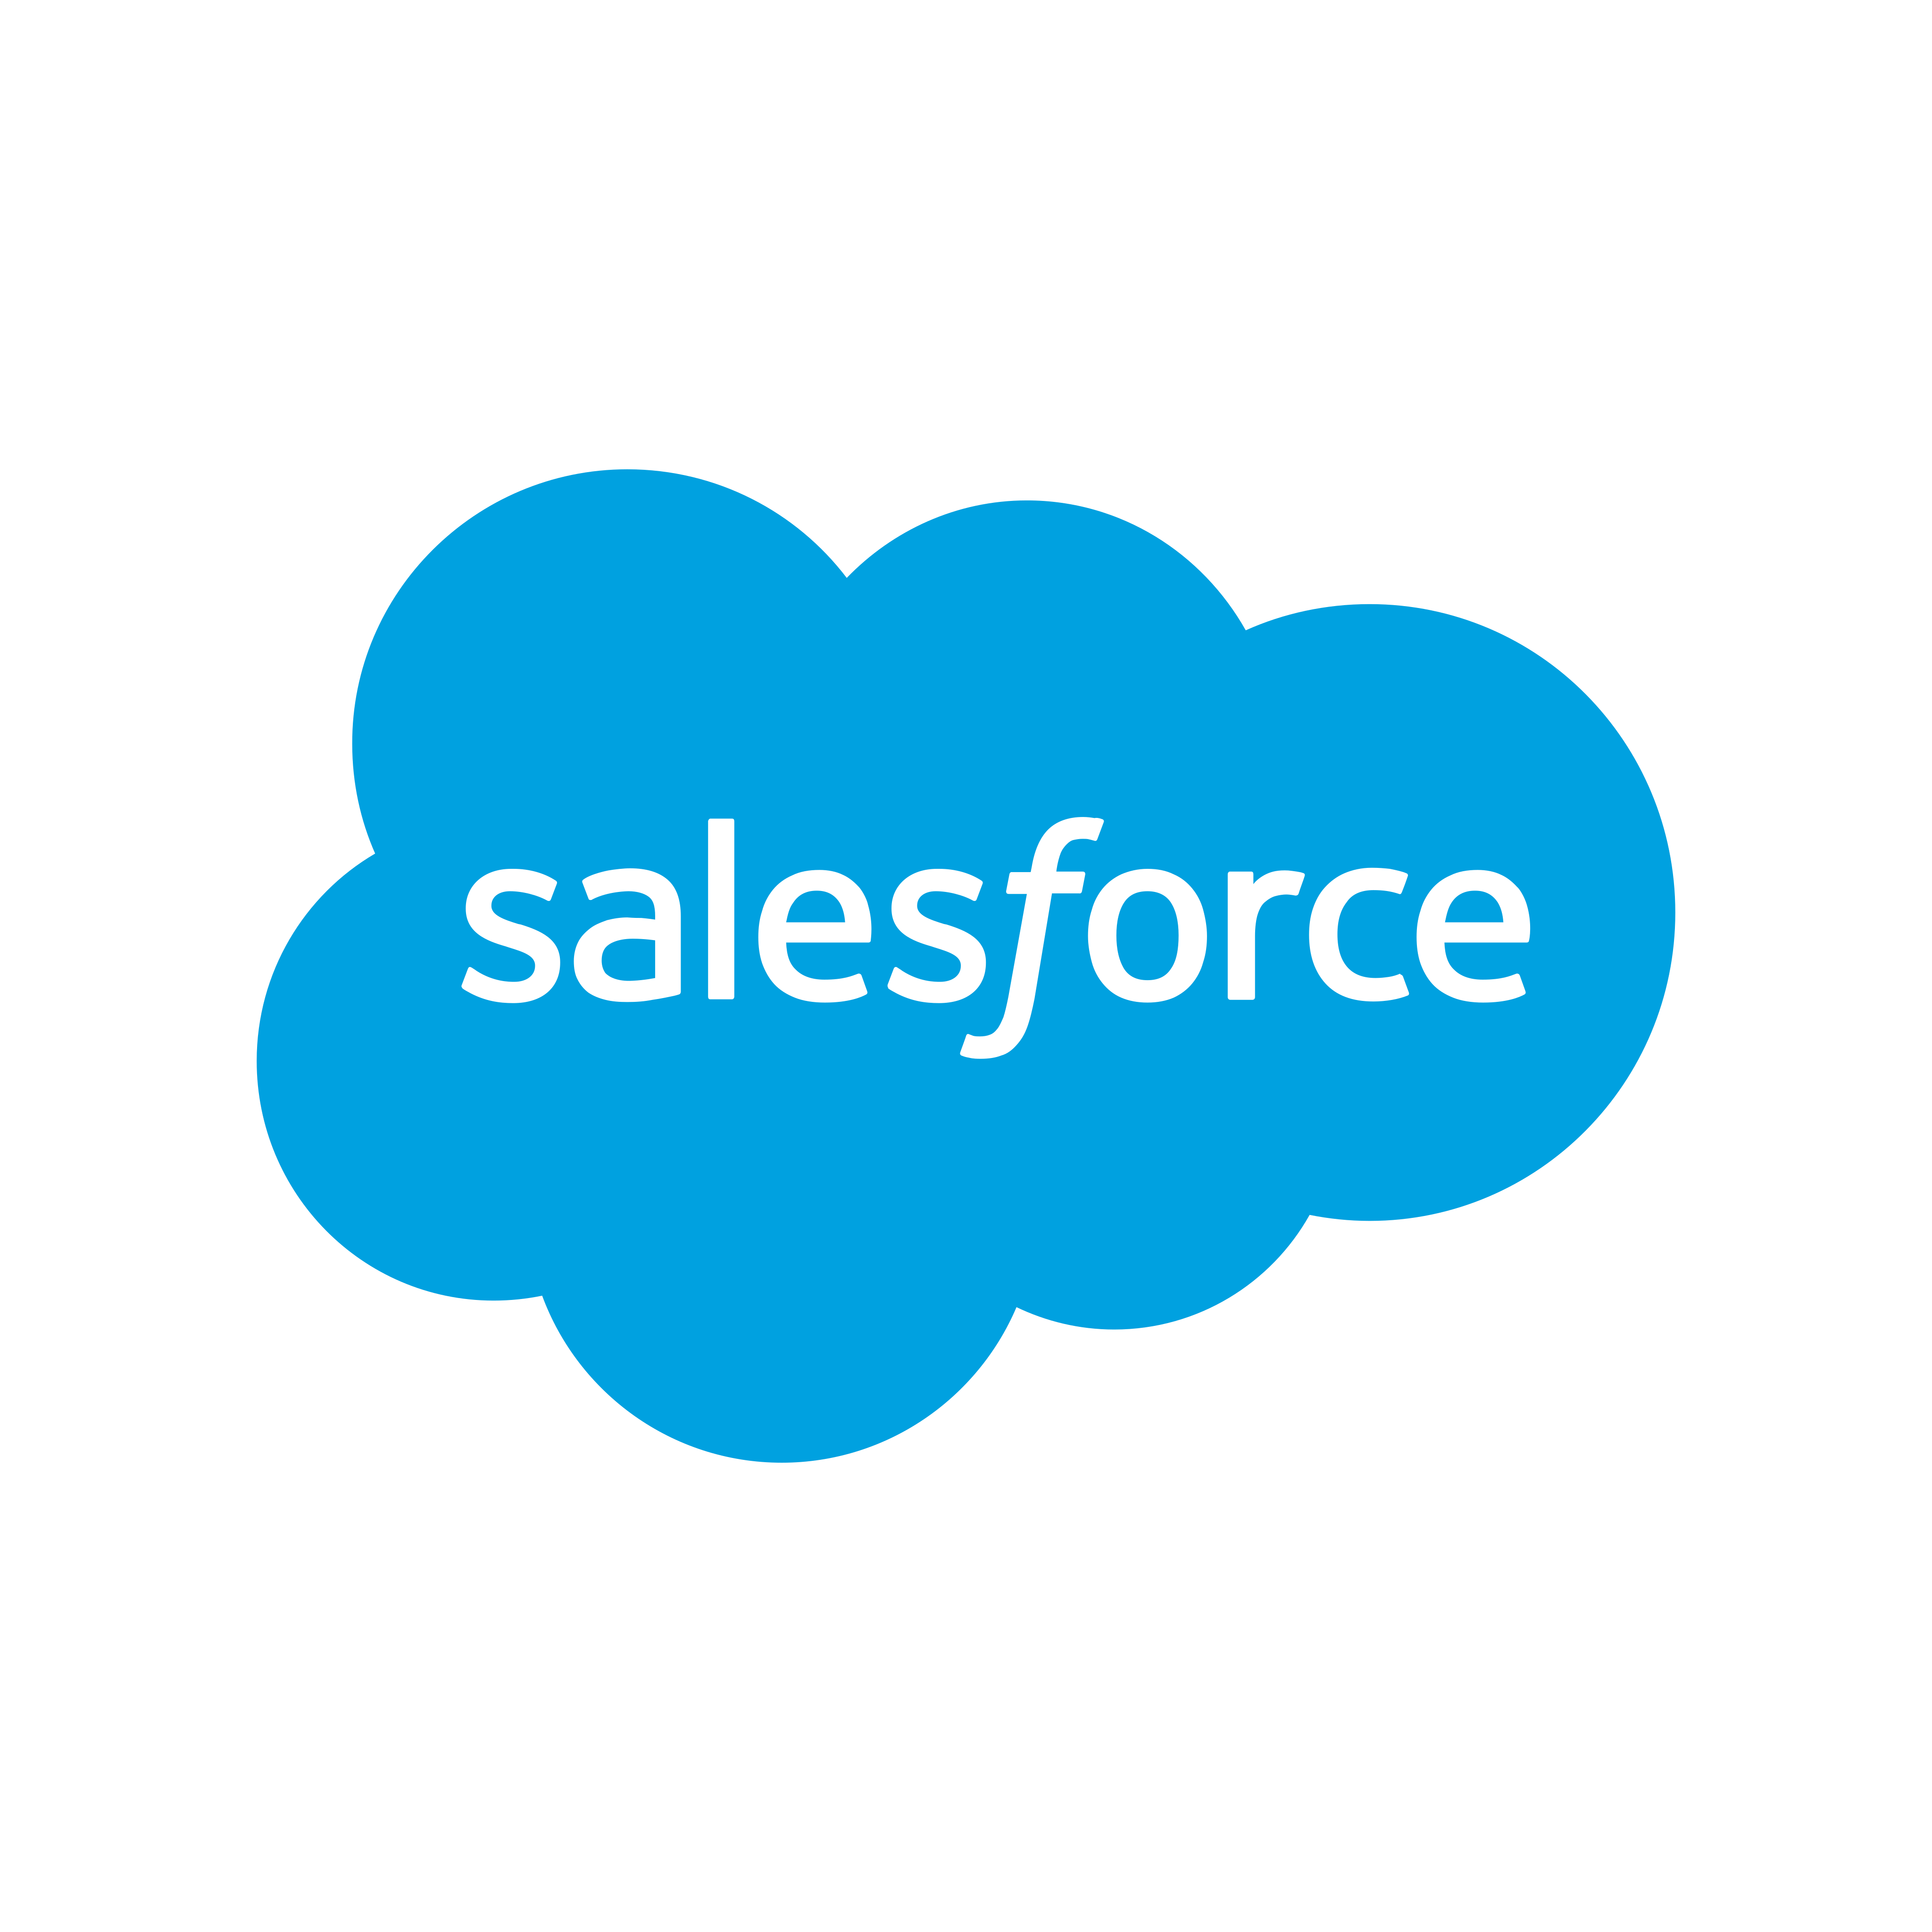 salesforce logo 0 - Salesforce Logo